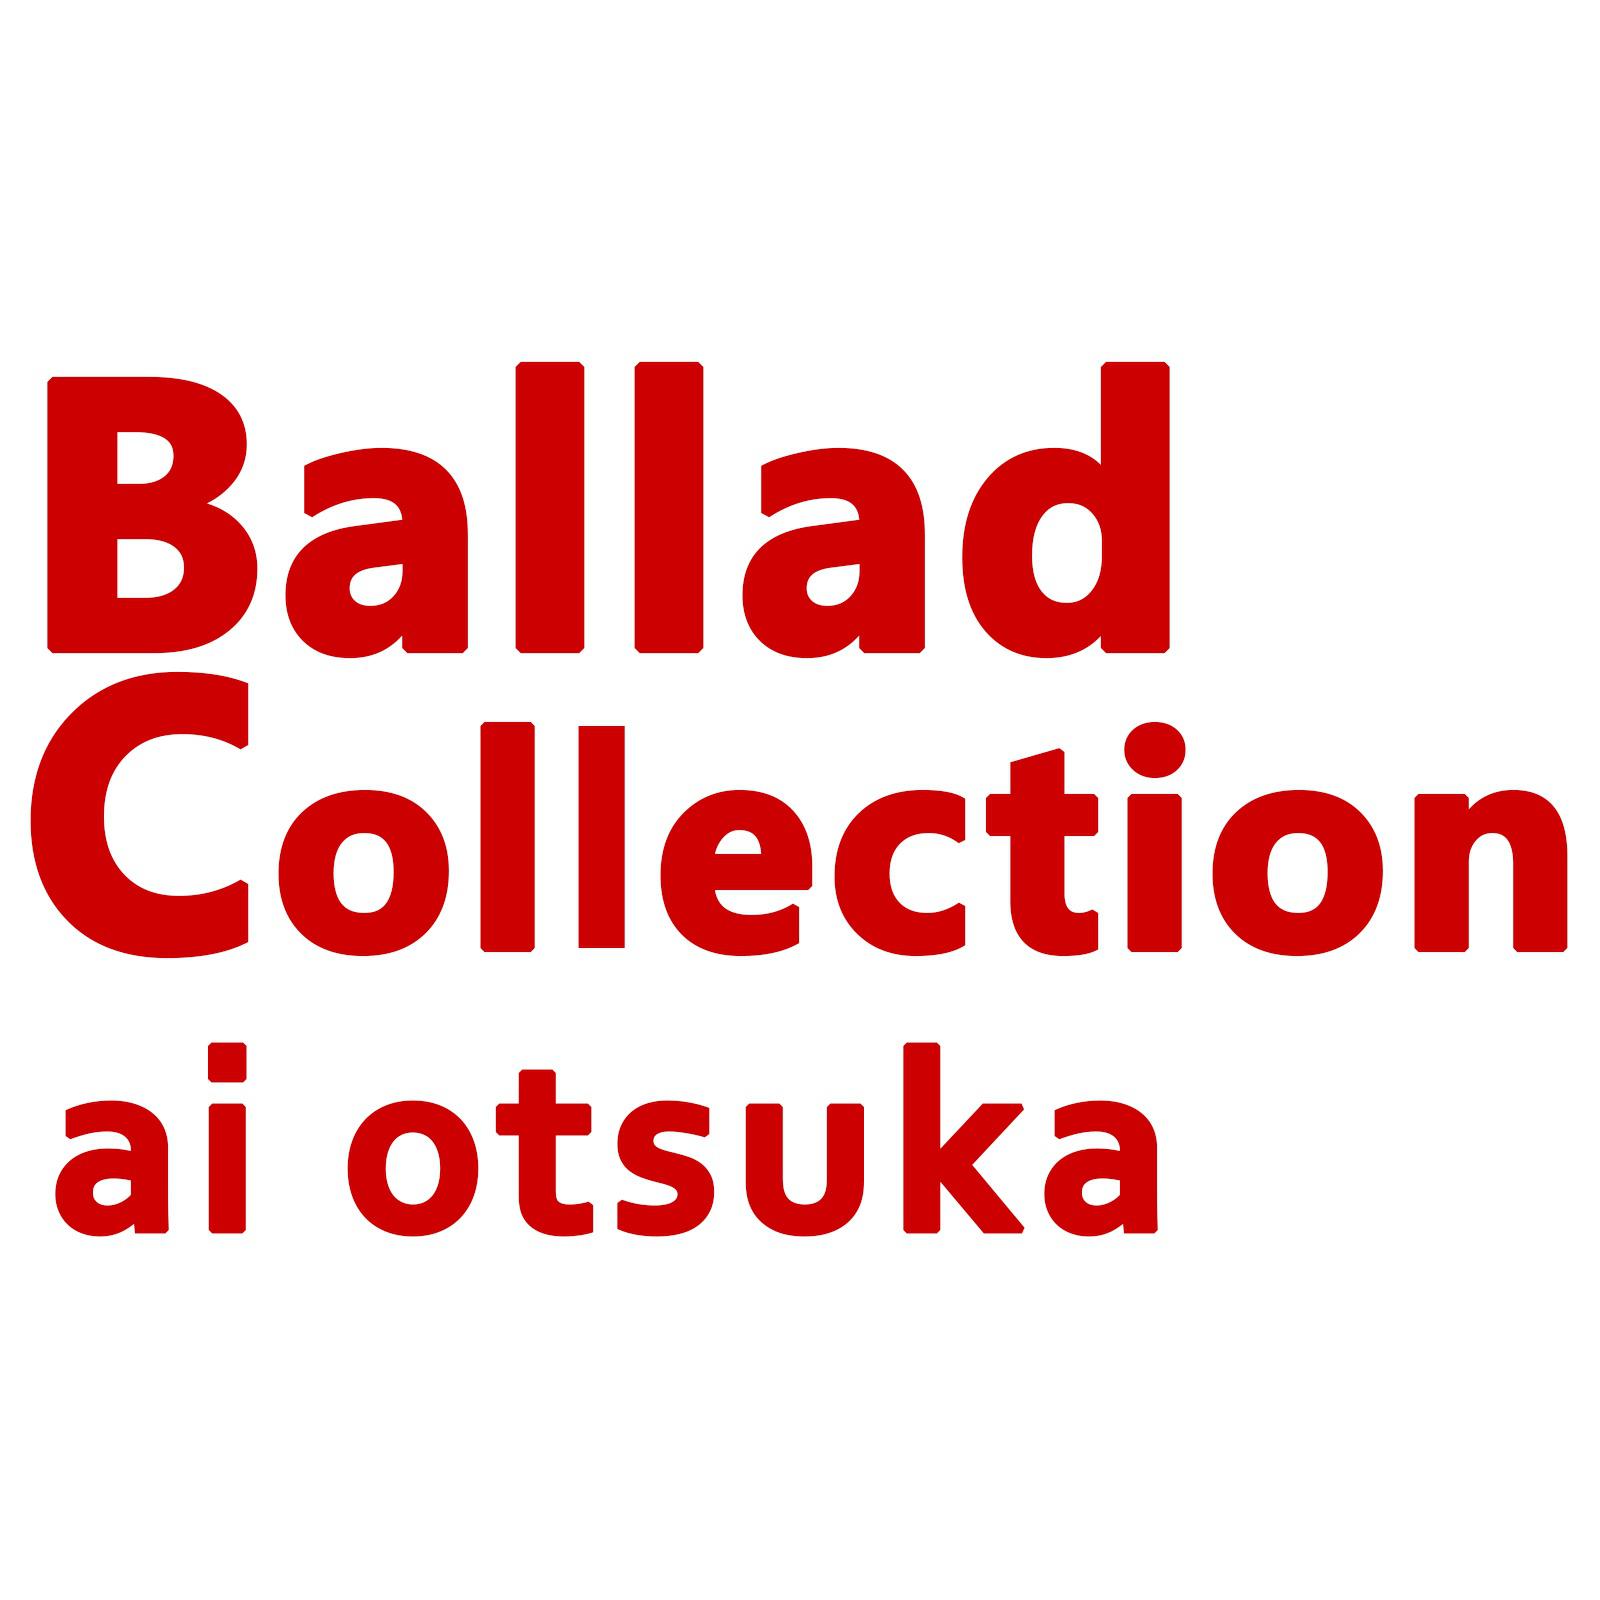 Ballad Collection专辑